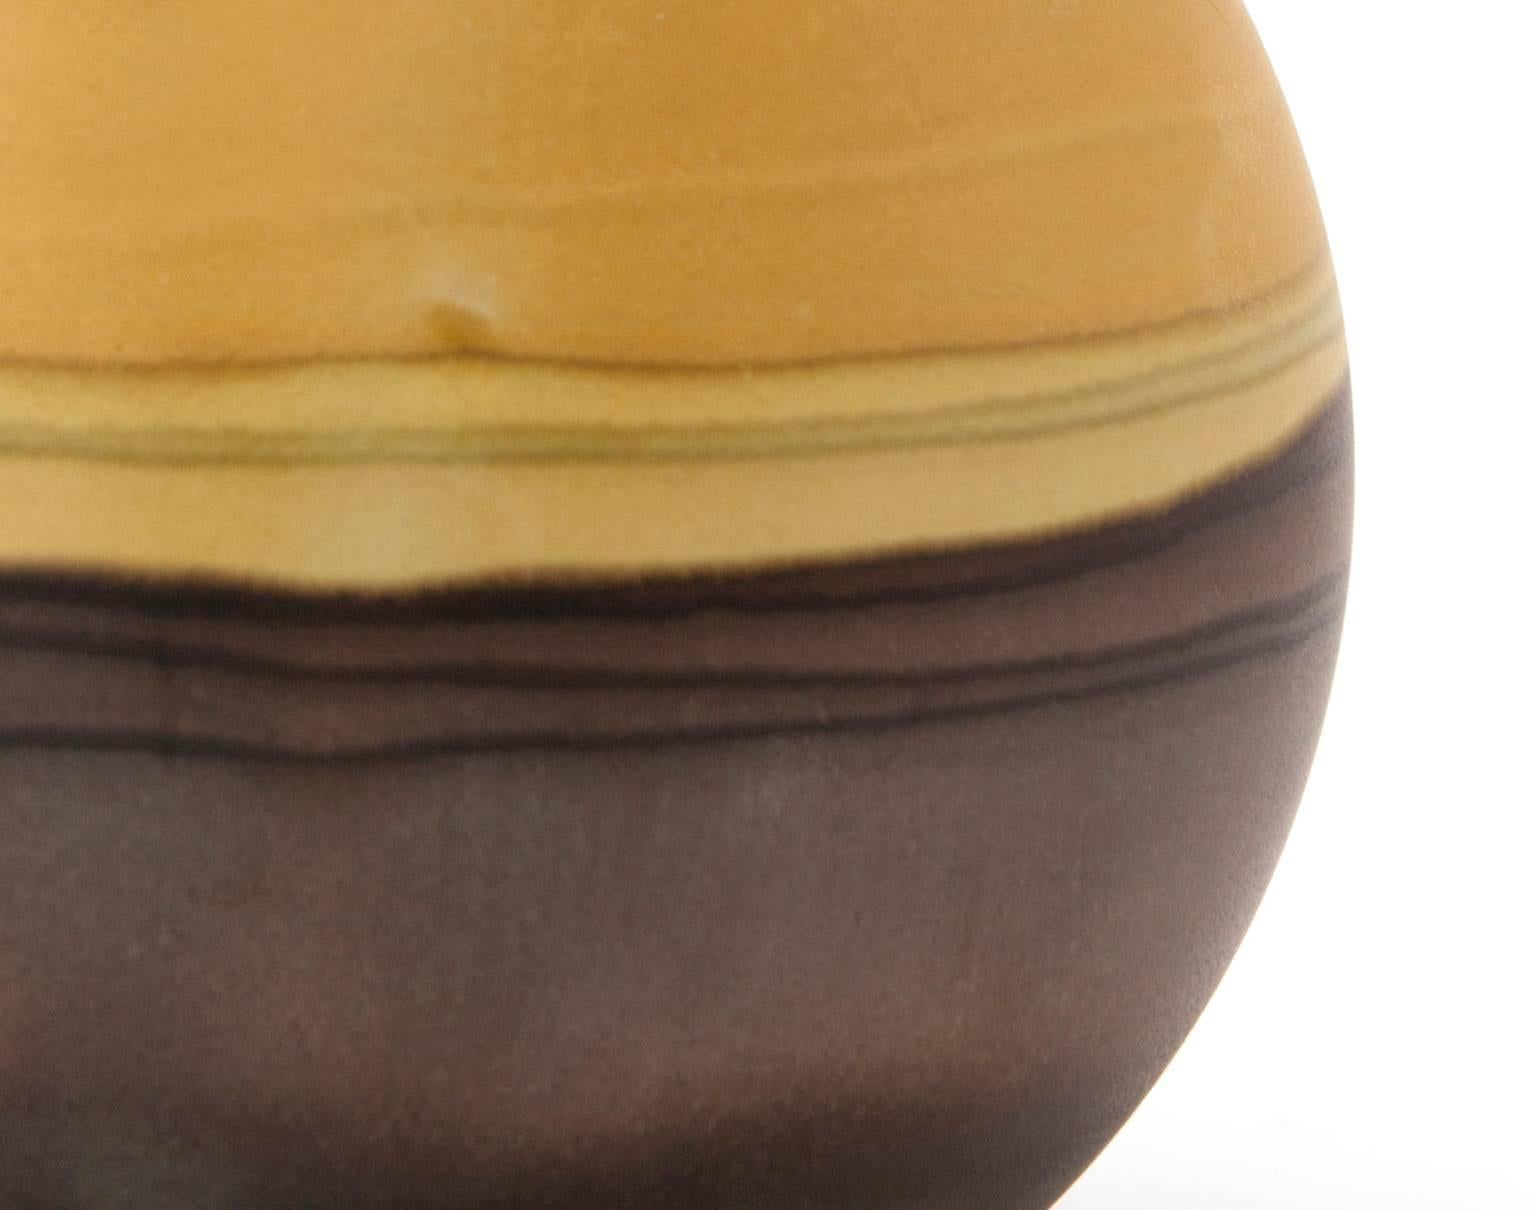 Organic Modern Unique Handmade 21st Century Ochre and Chocolate Dip-Dyed Bud Vase